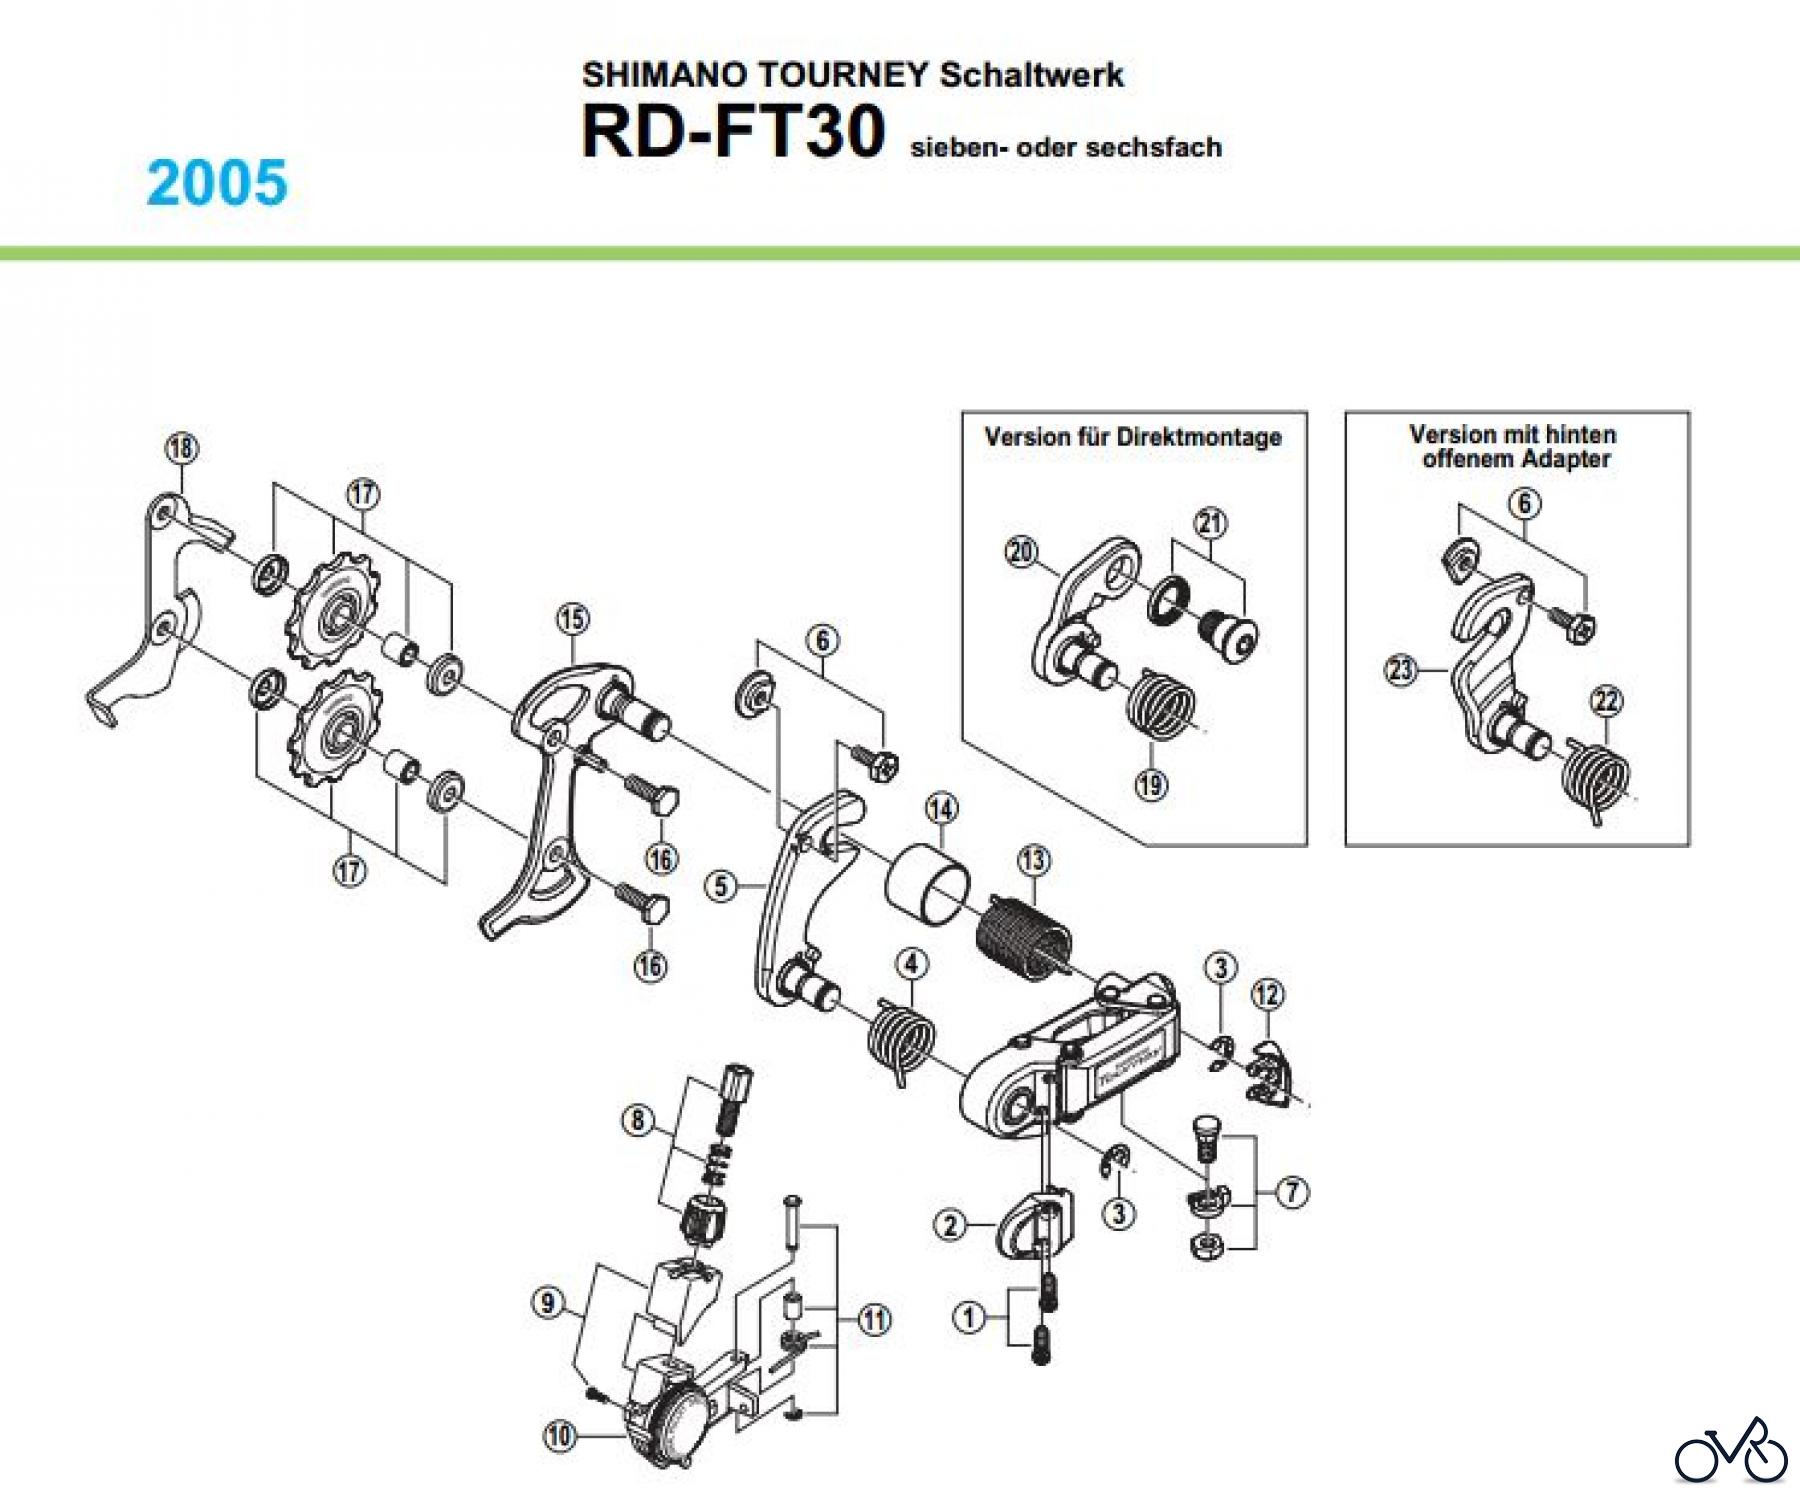  Shimano RD Rear Derailleur - Schaltwerk RD-FT30-05